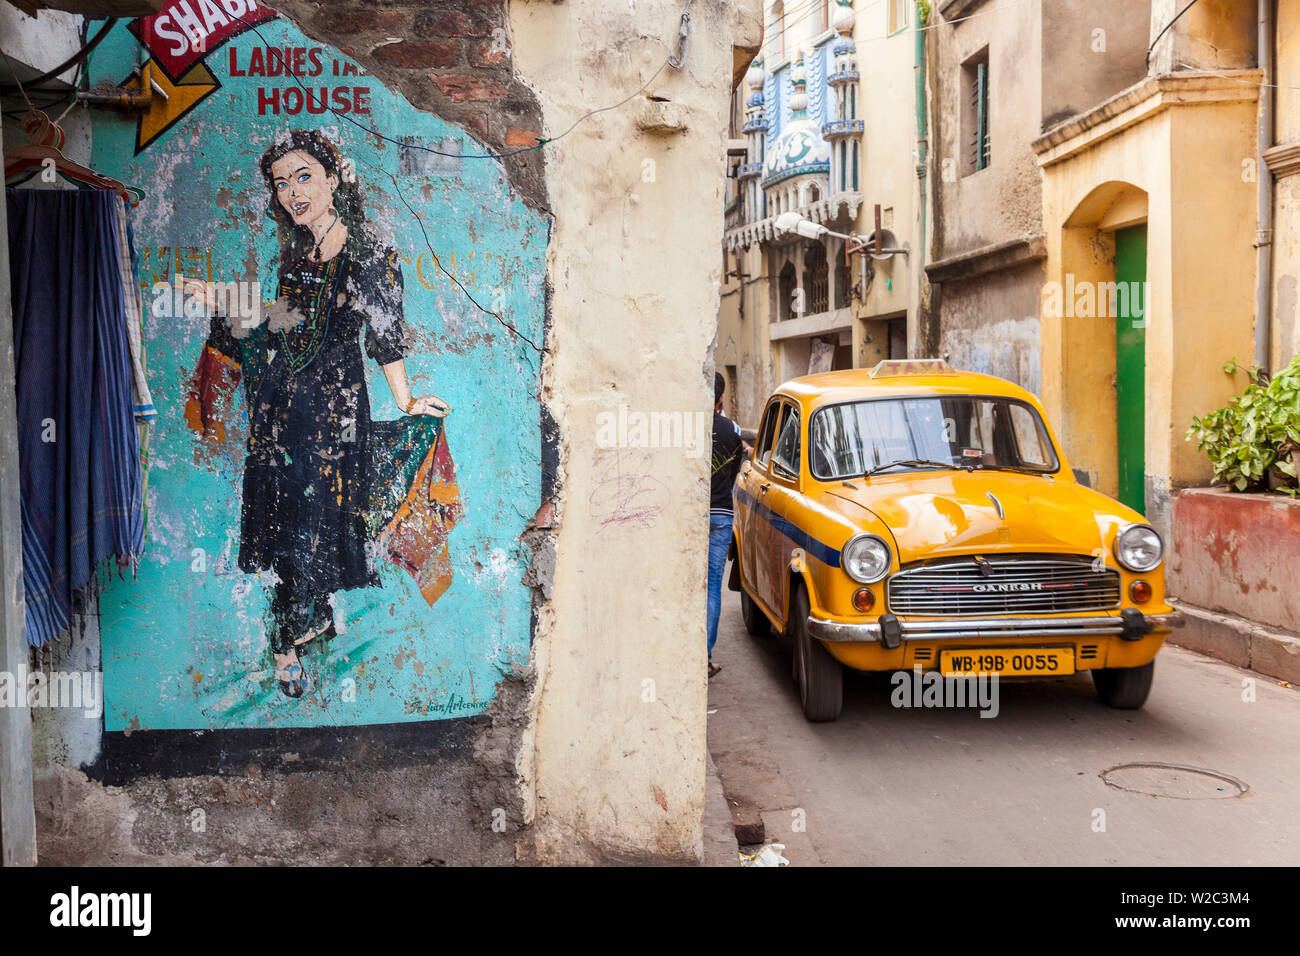 Taxi and street scene, Kolkata (Calcutta), West Bengal, India Stock Photo